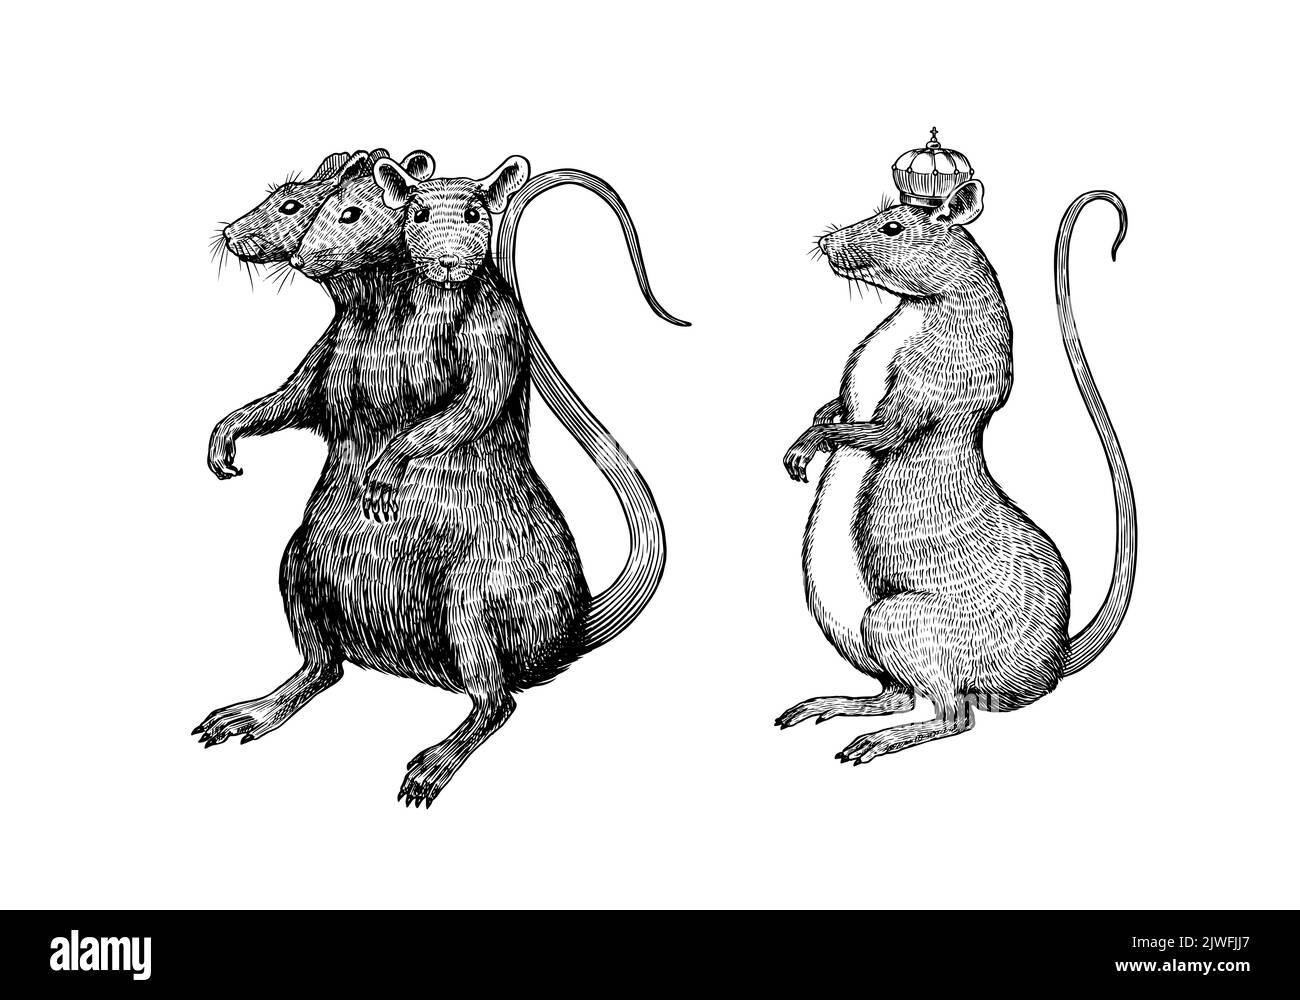 File:Rat King Illustration.svg - Wikipedia